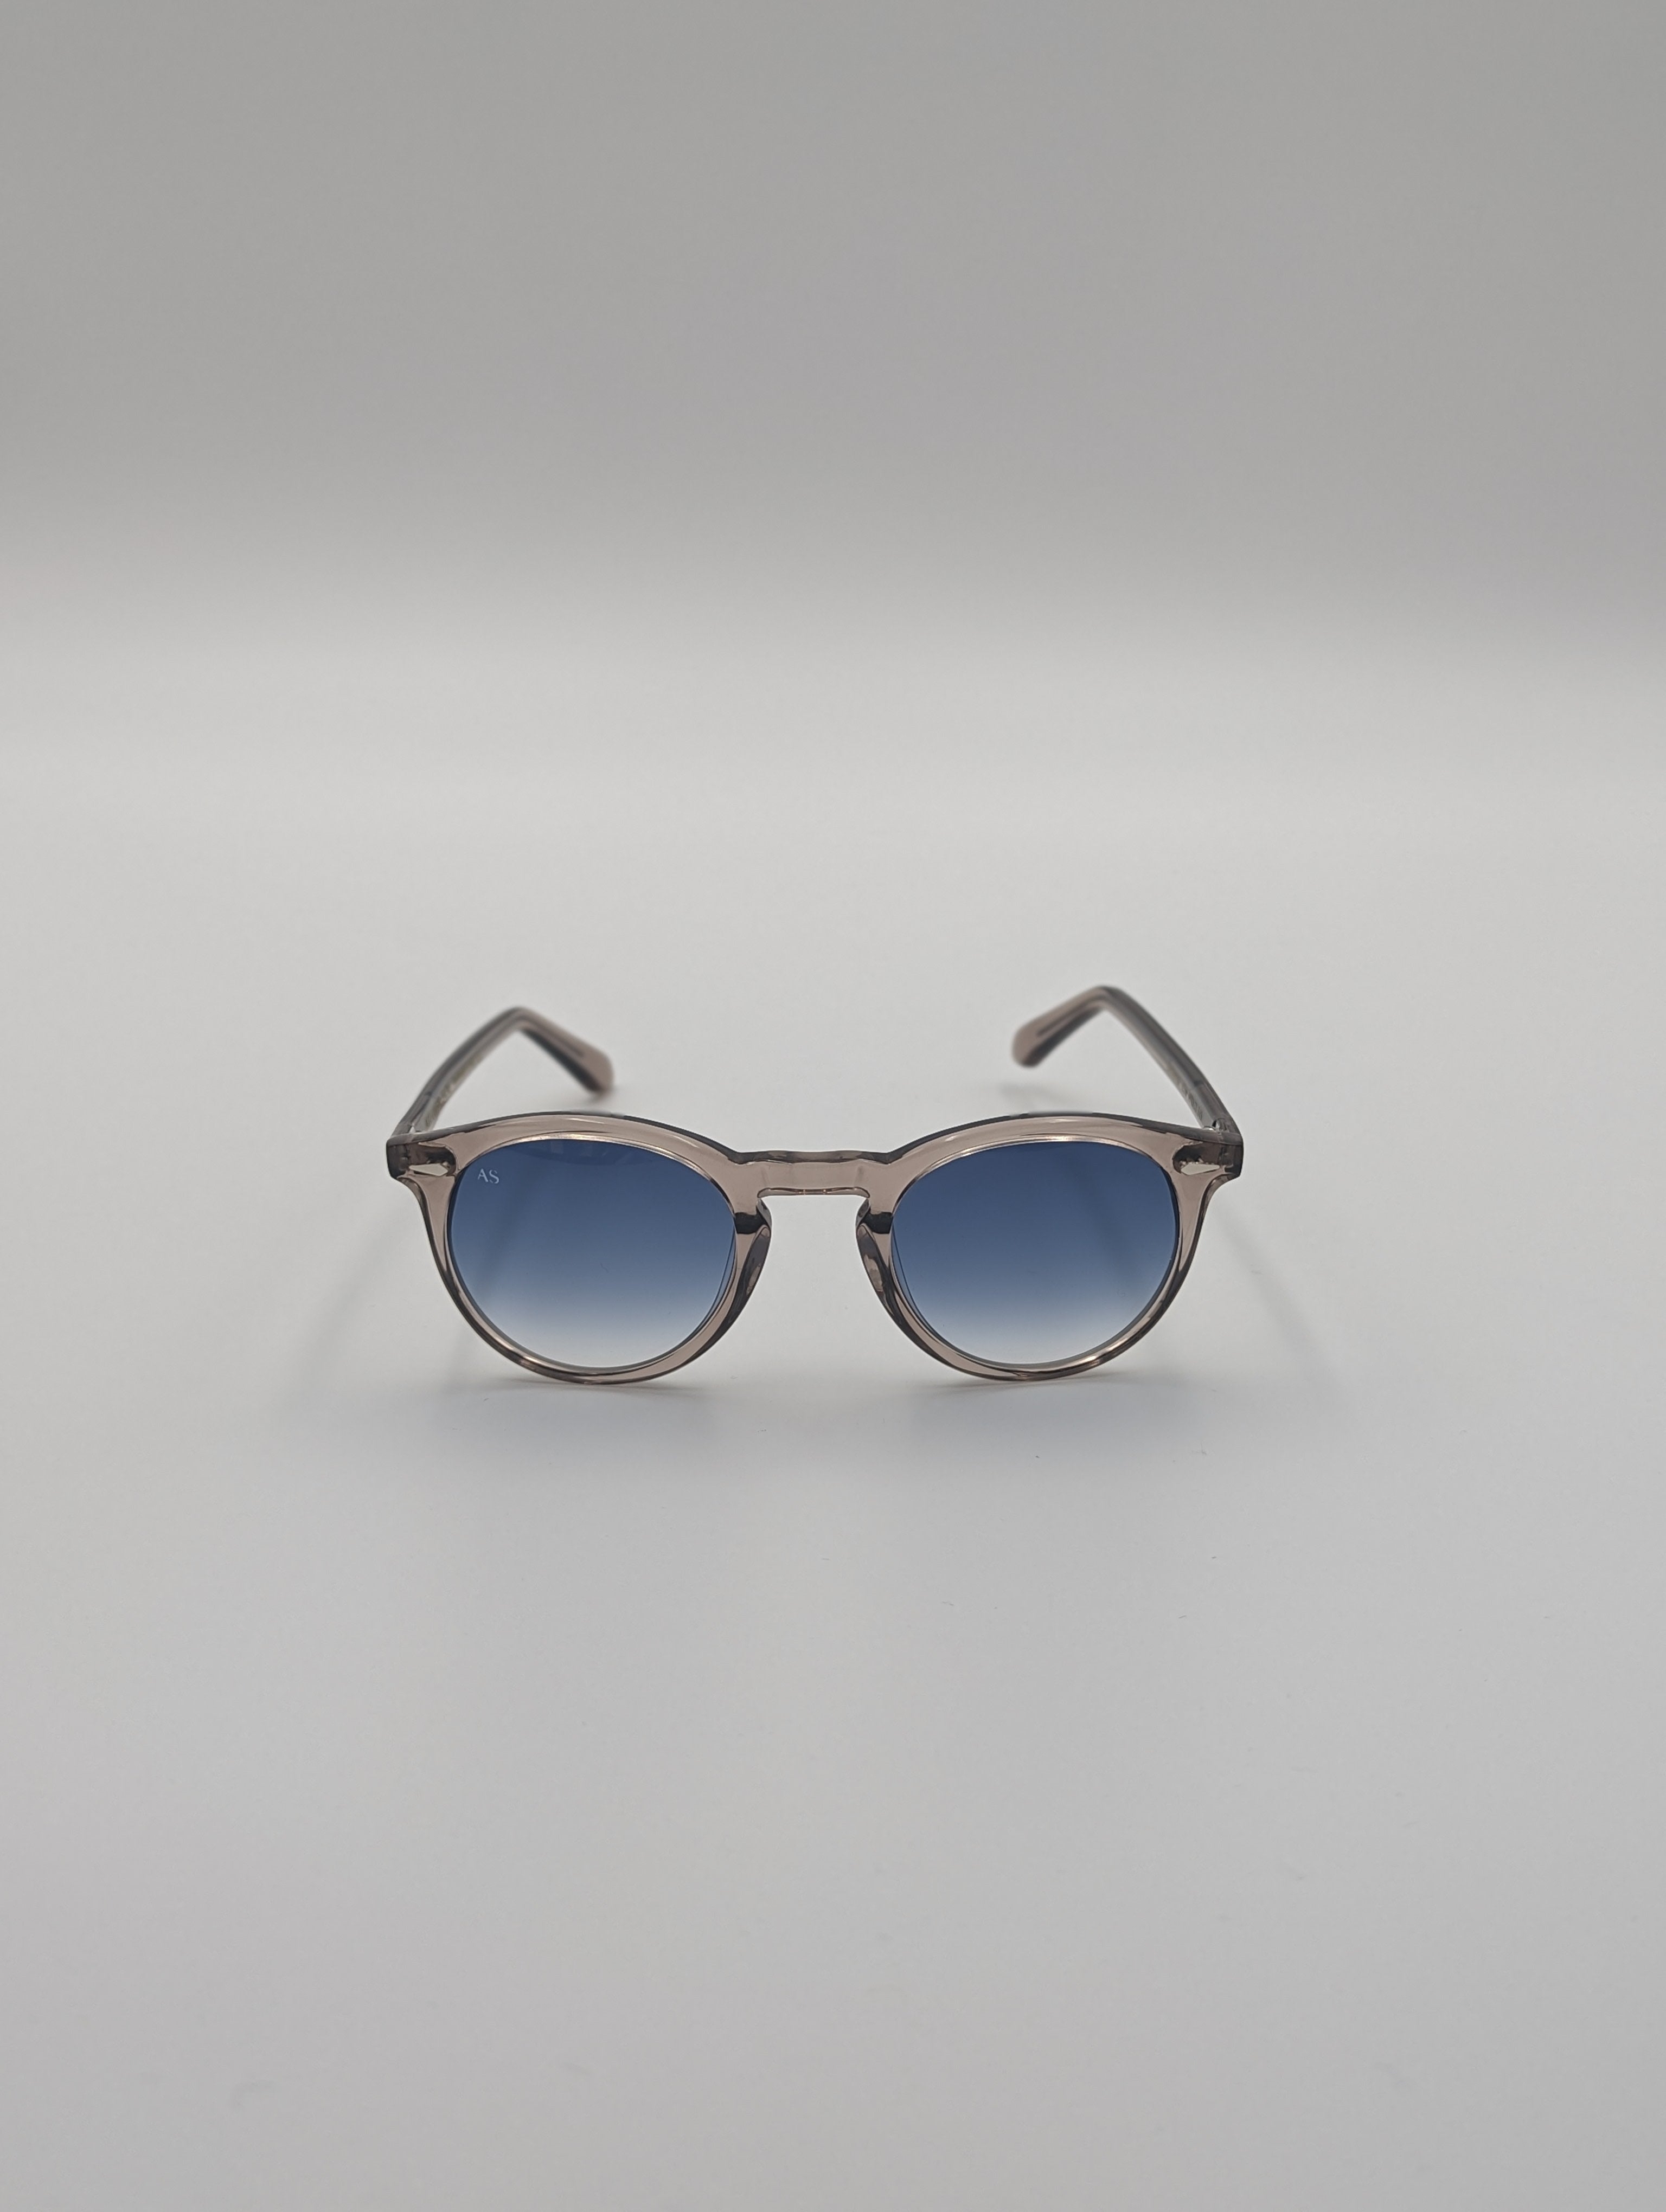 Sunglasses Iconic - Taupe